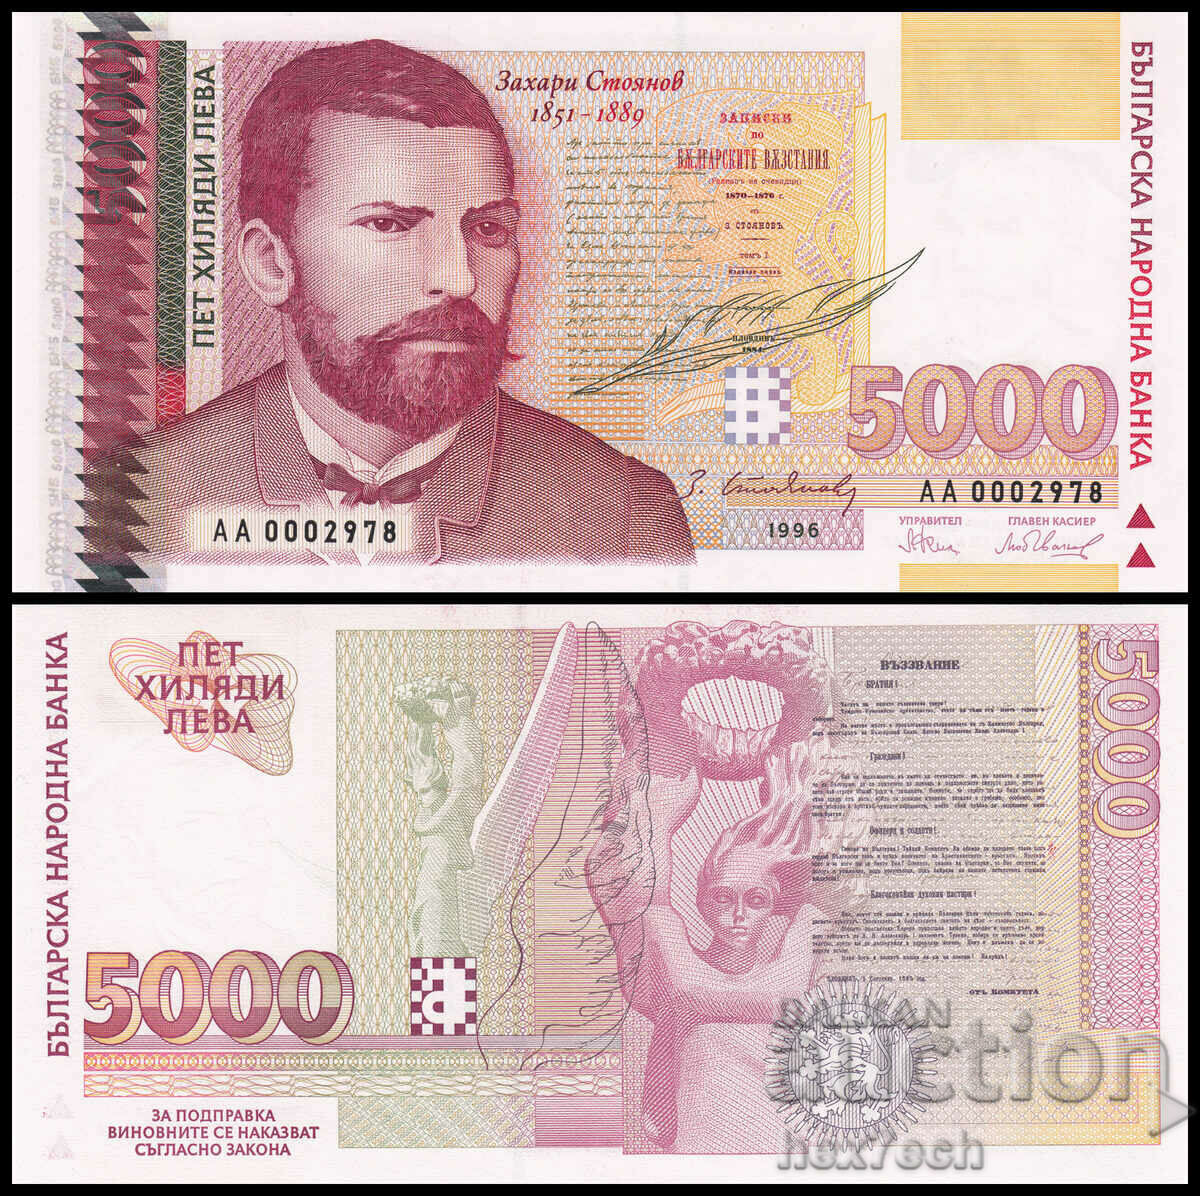 ❤️ ⭐ Bulgaria 1996 5000 BGN UNC new ⭐ ❤️